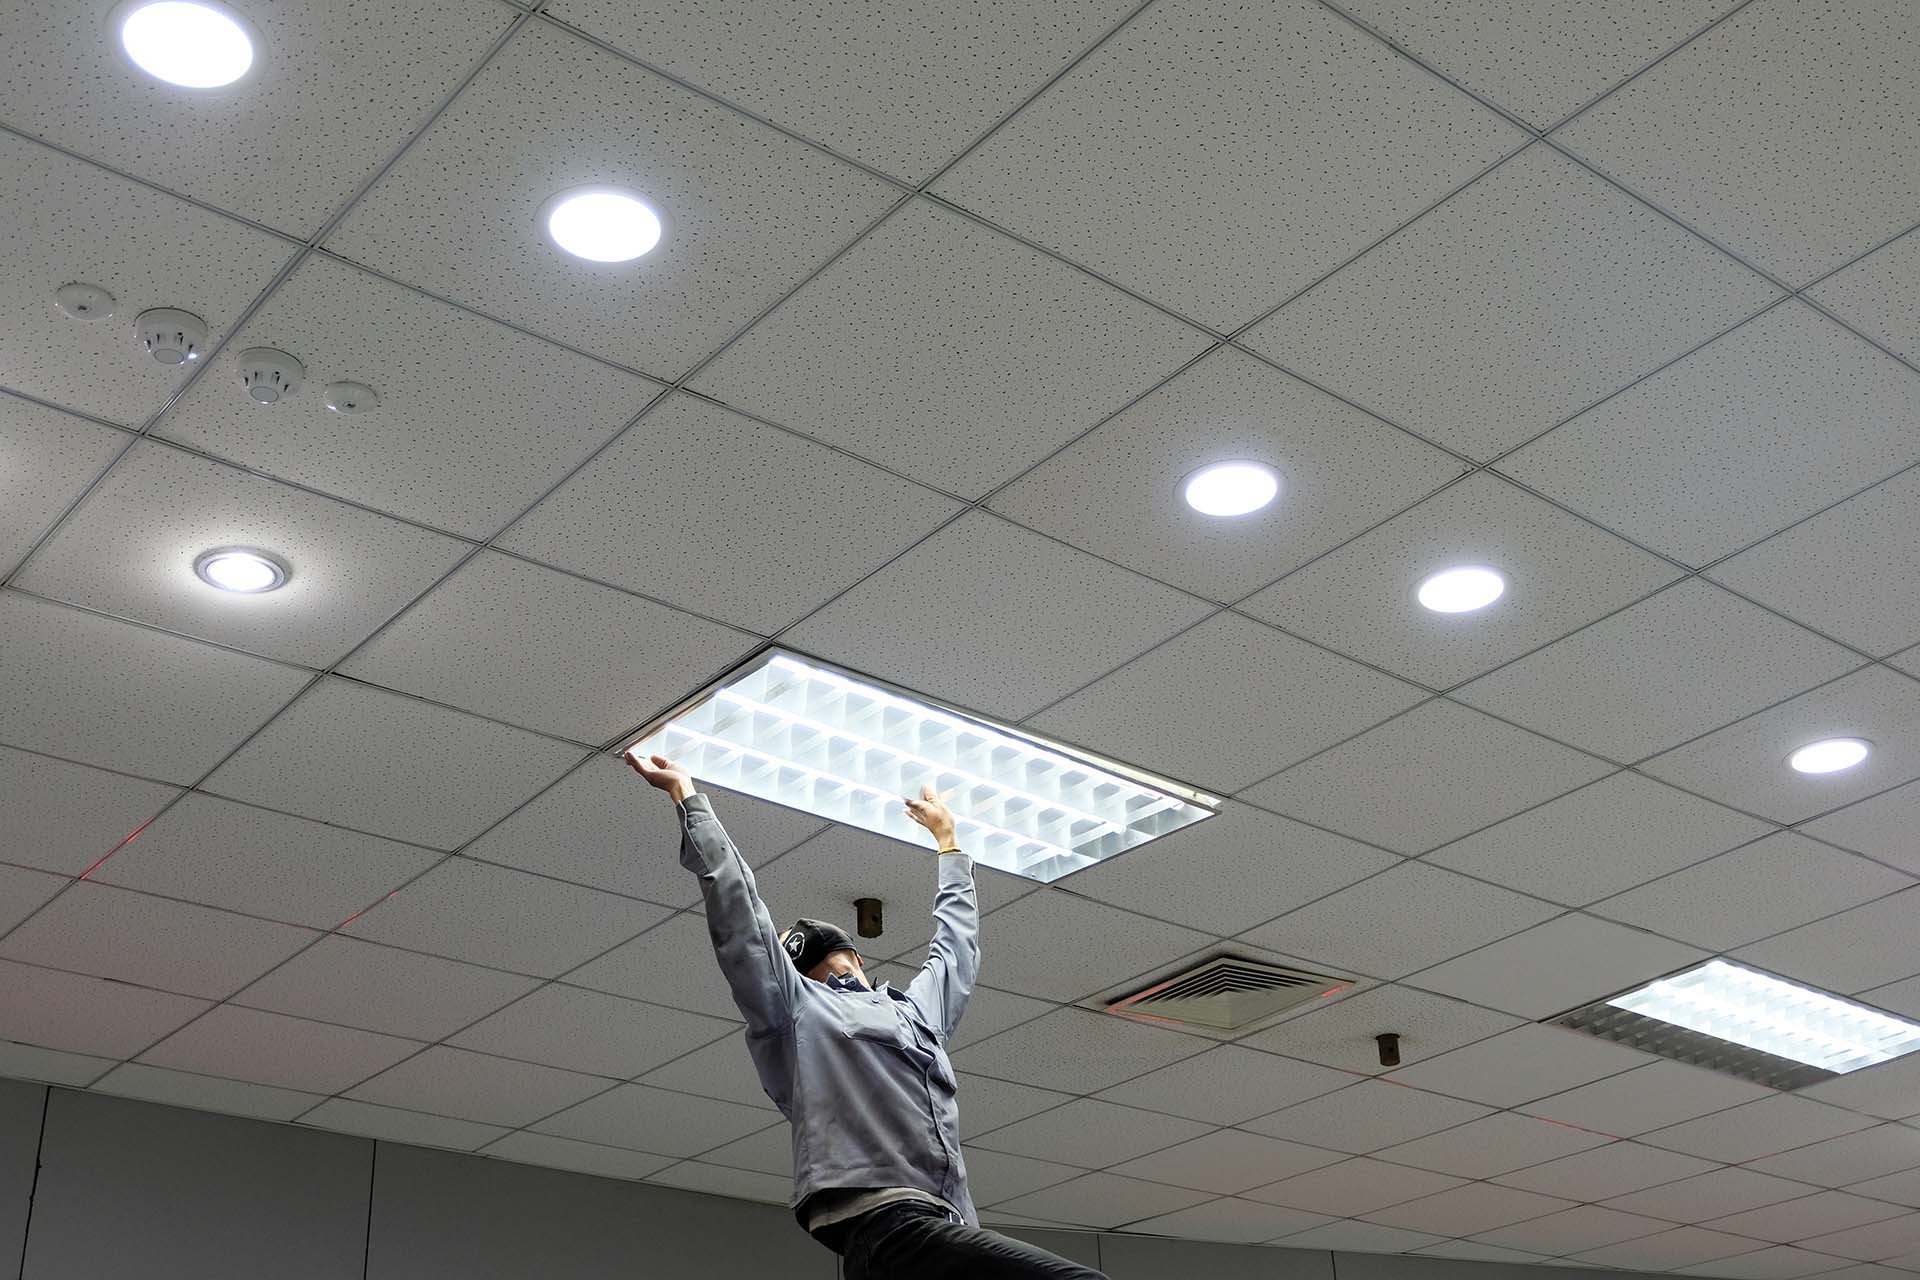 Maintenance man changing light bulbs in office